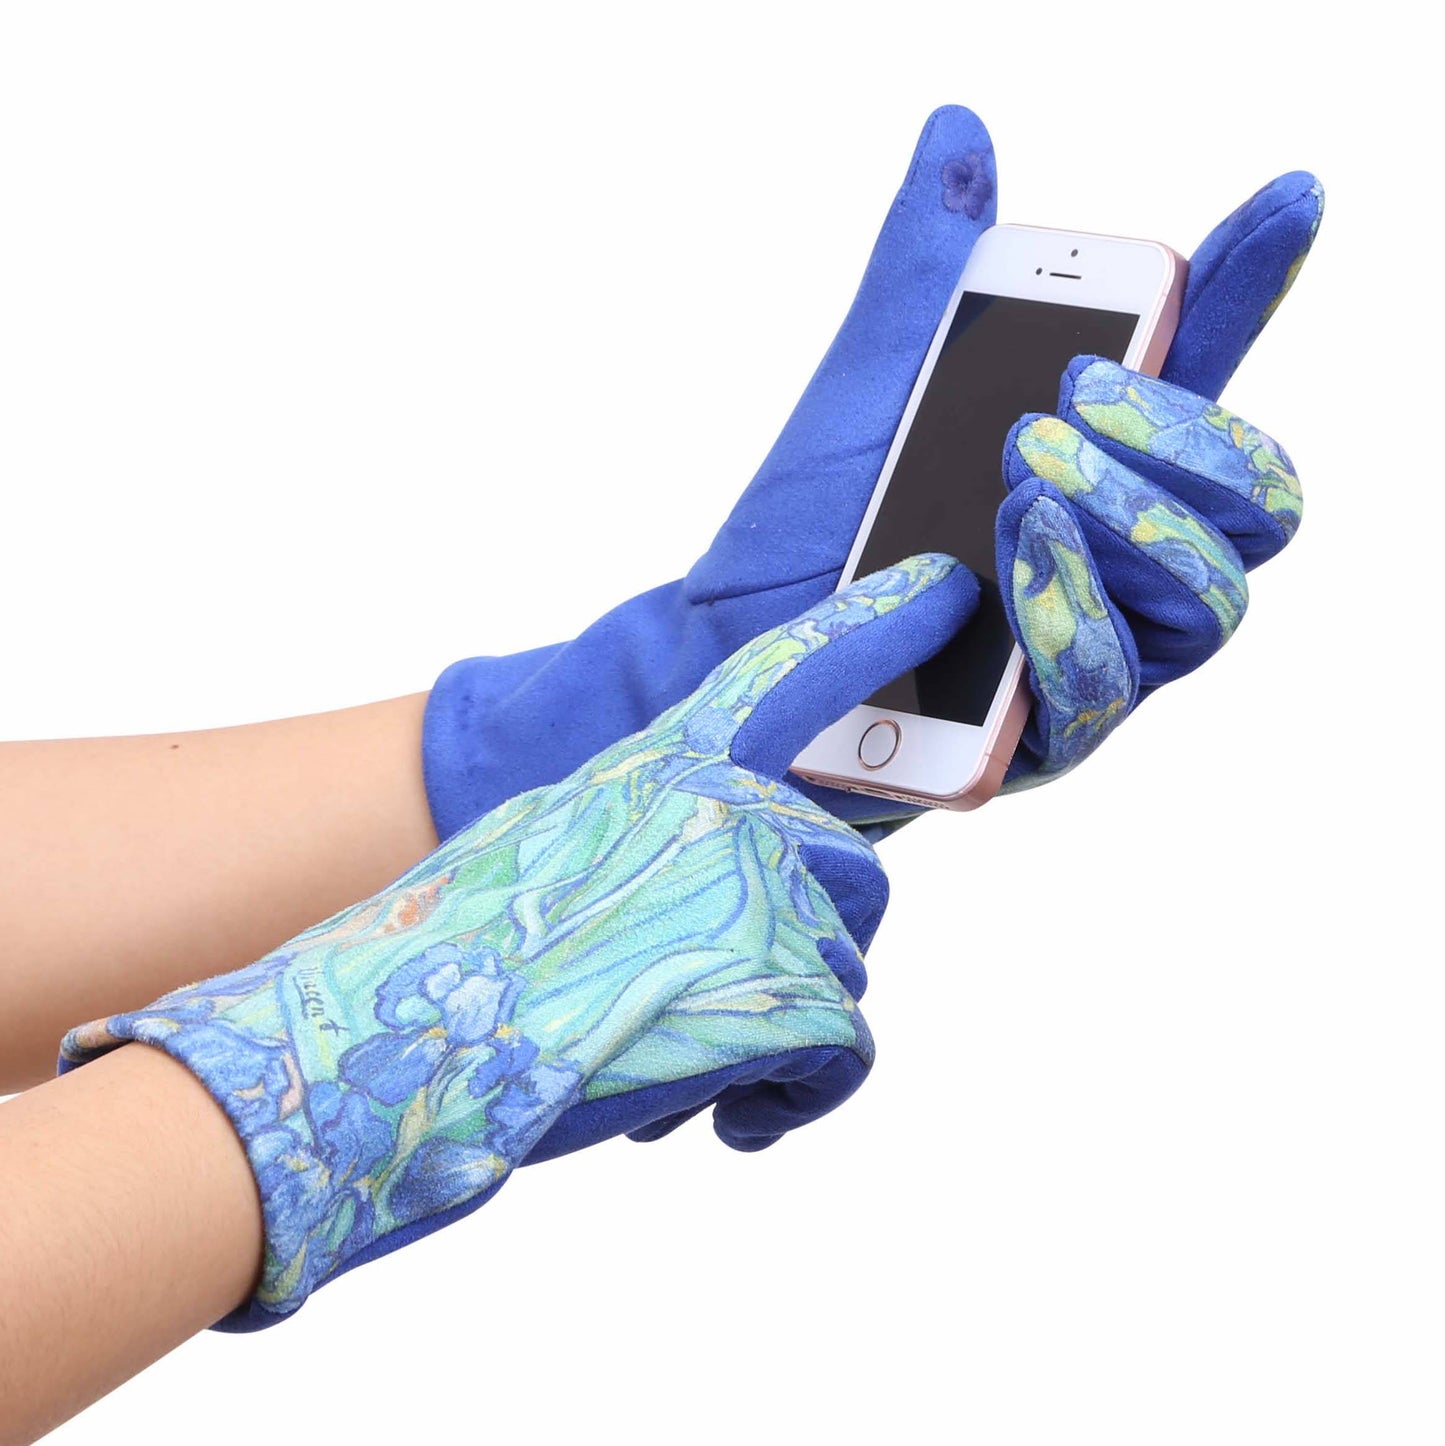 Van Gogh "Irises" Touch Screen Gloves